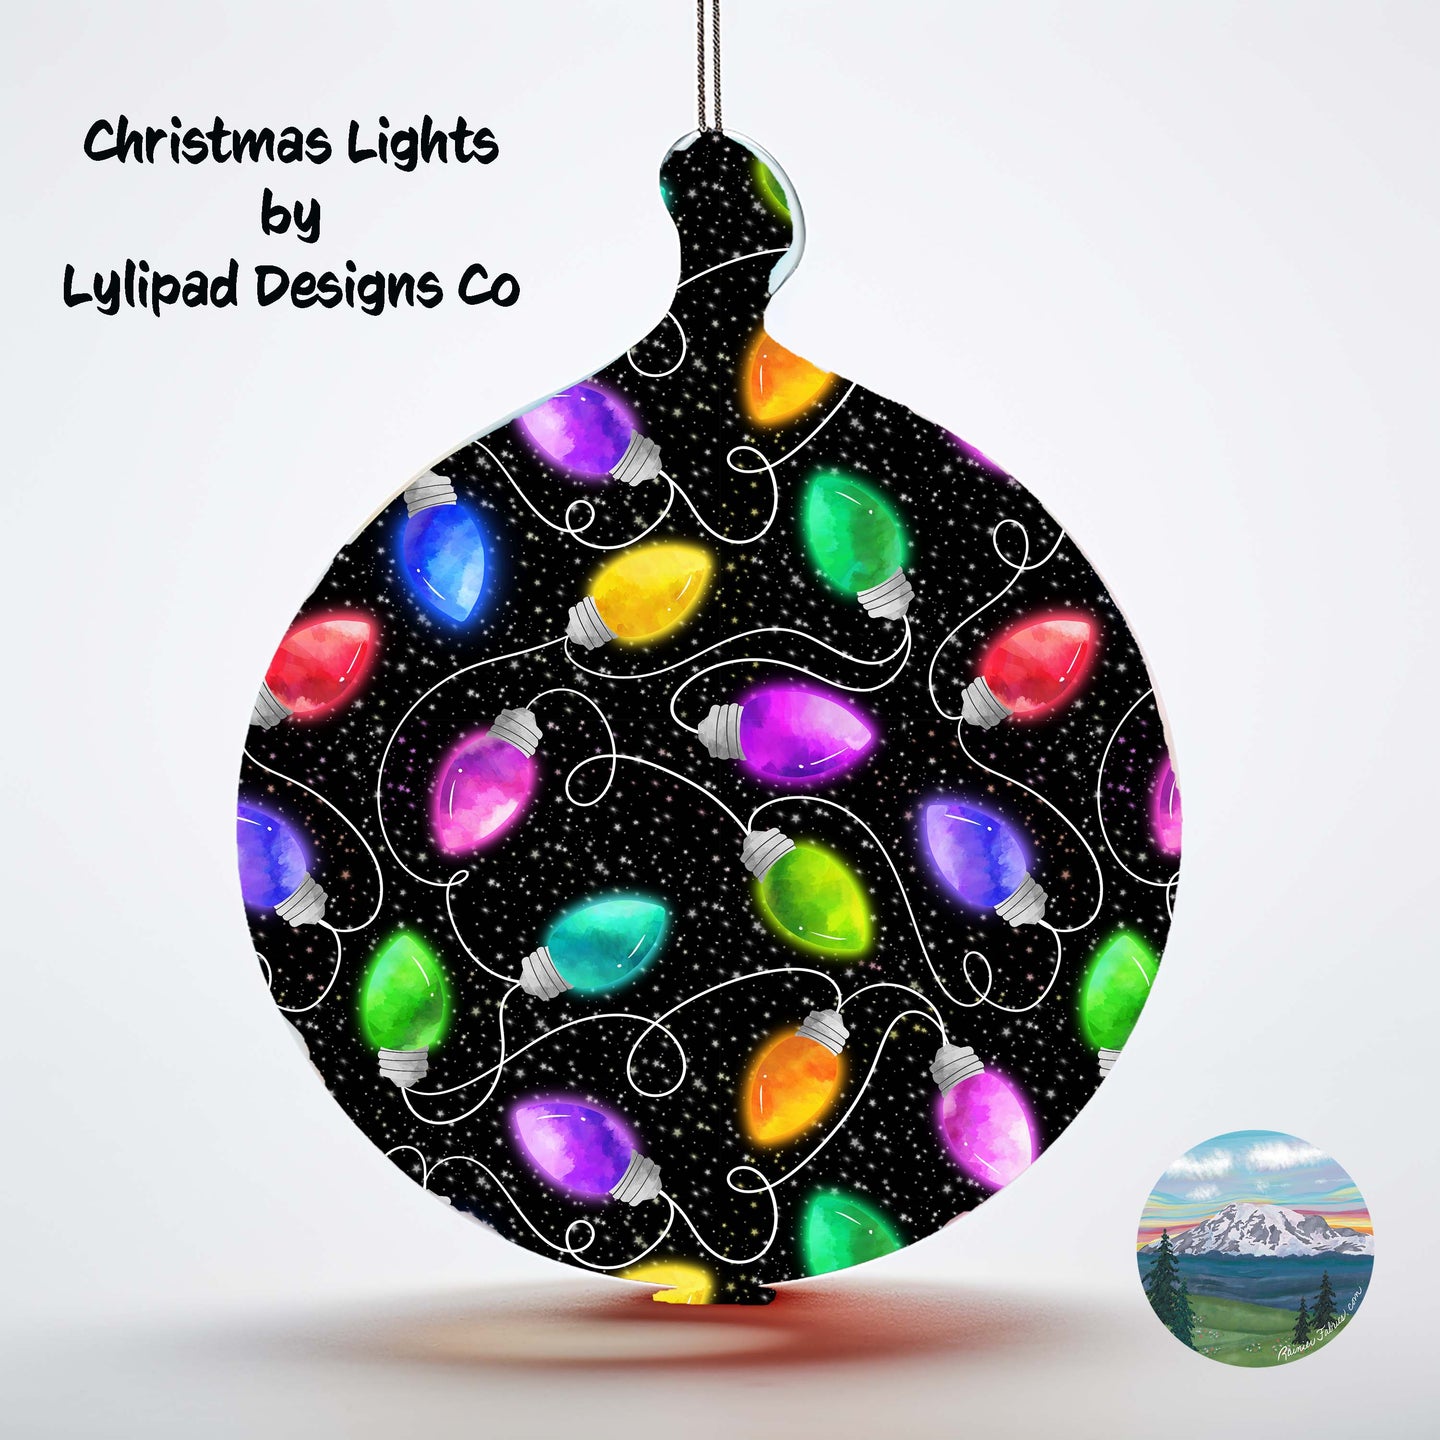 Christmas Lights by Lylipad Designs Co